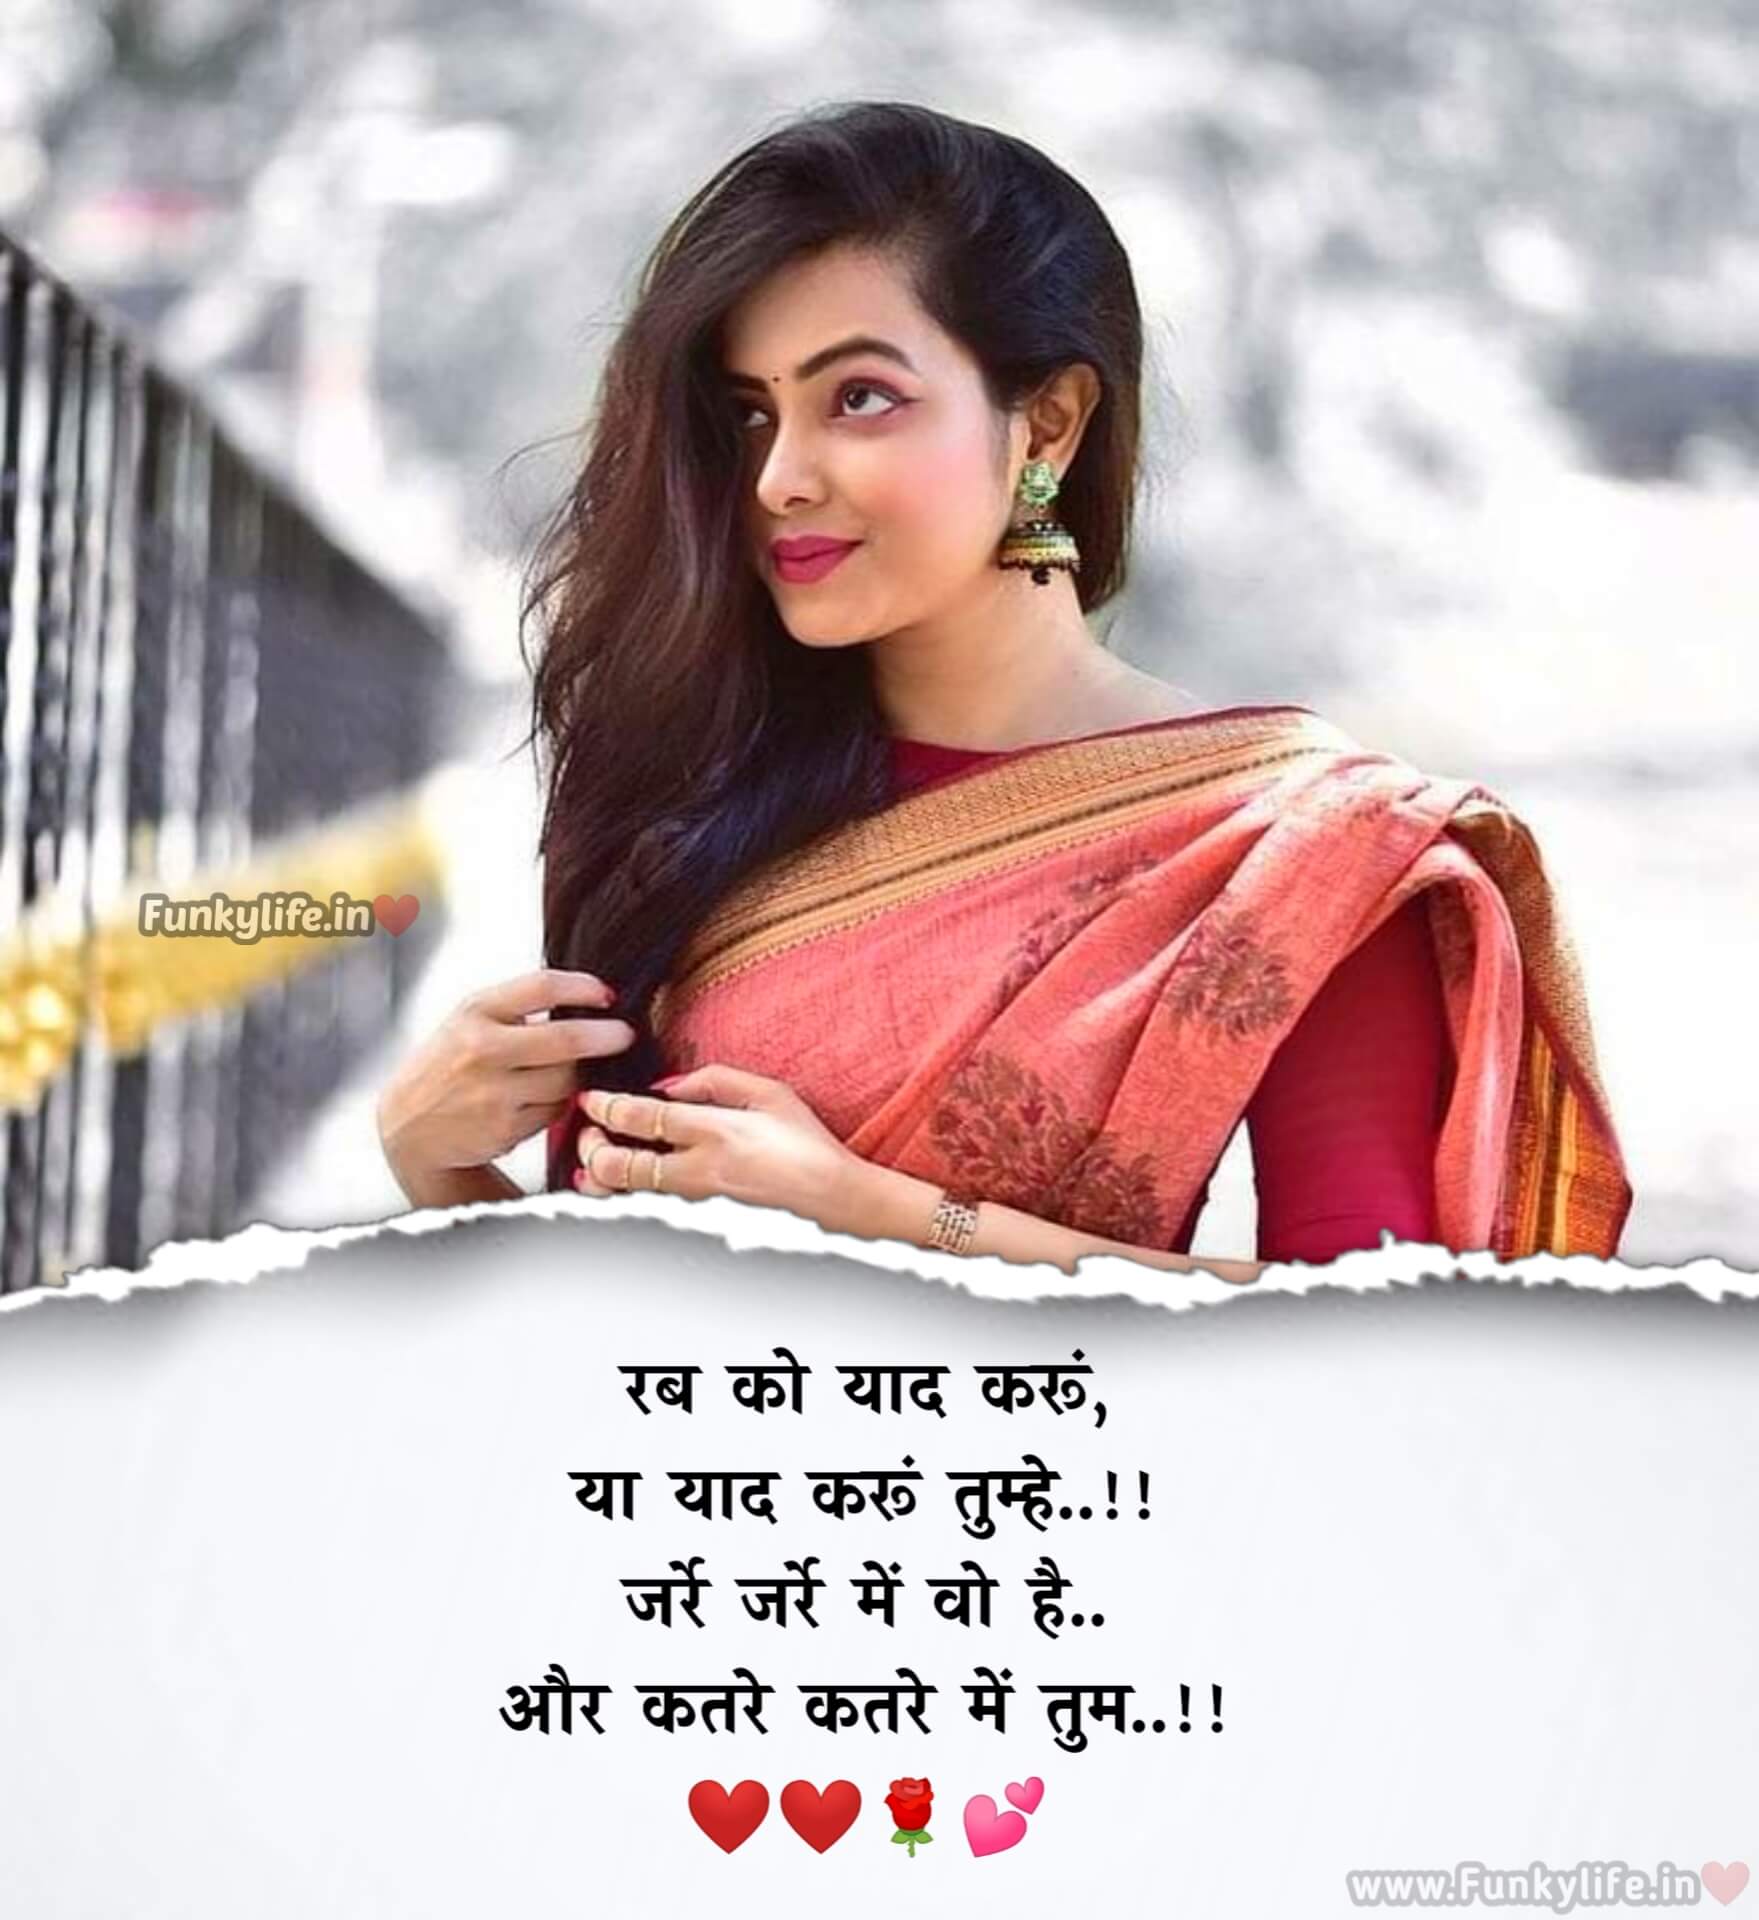 Love Shayari In Hindi #13 - Funky Life